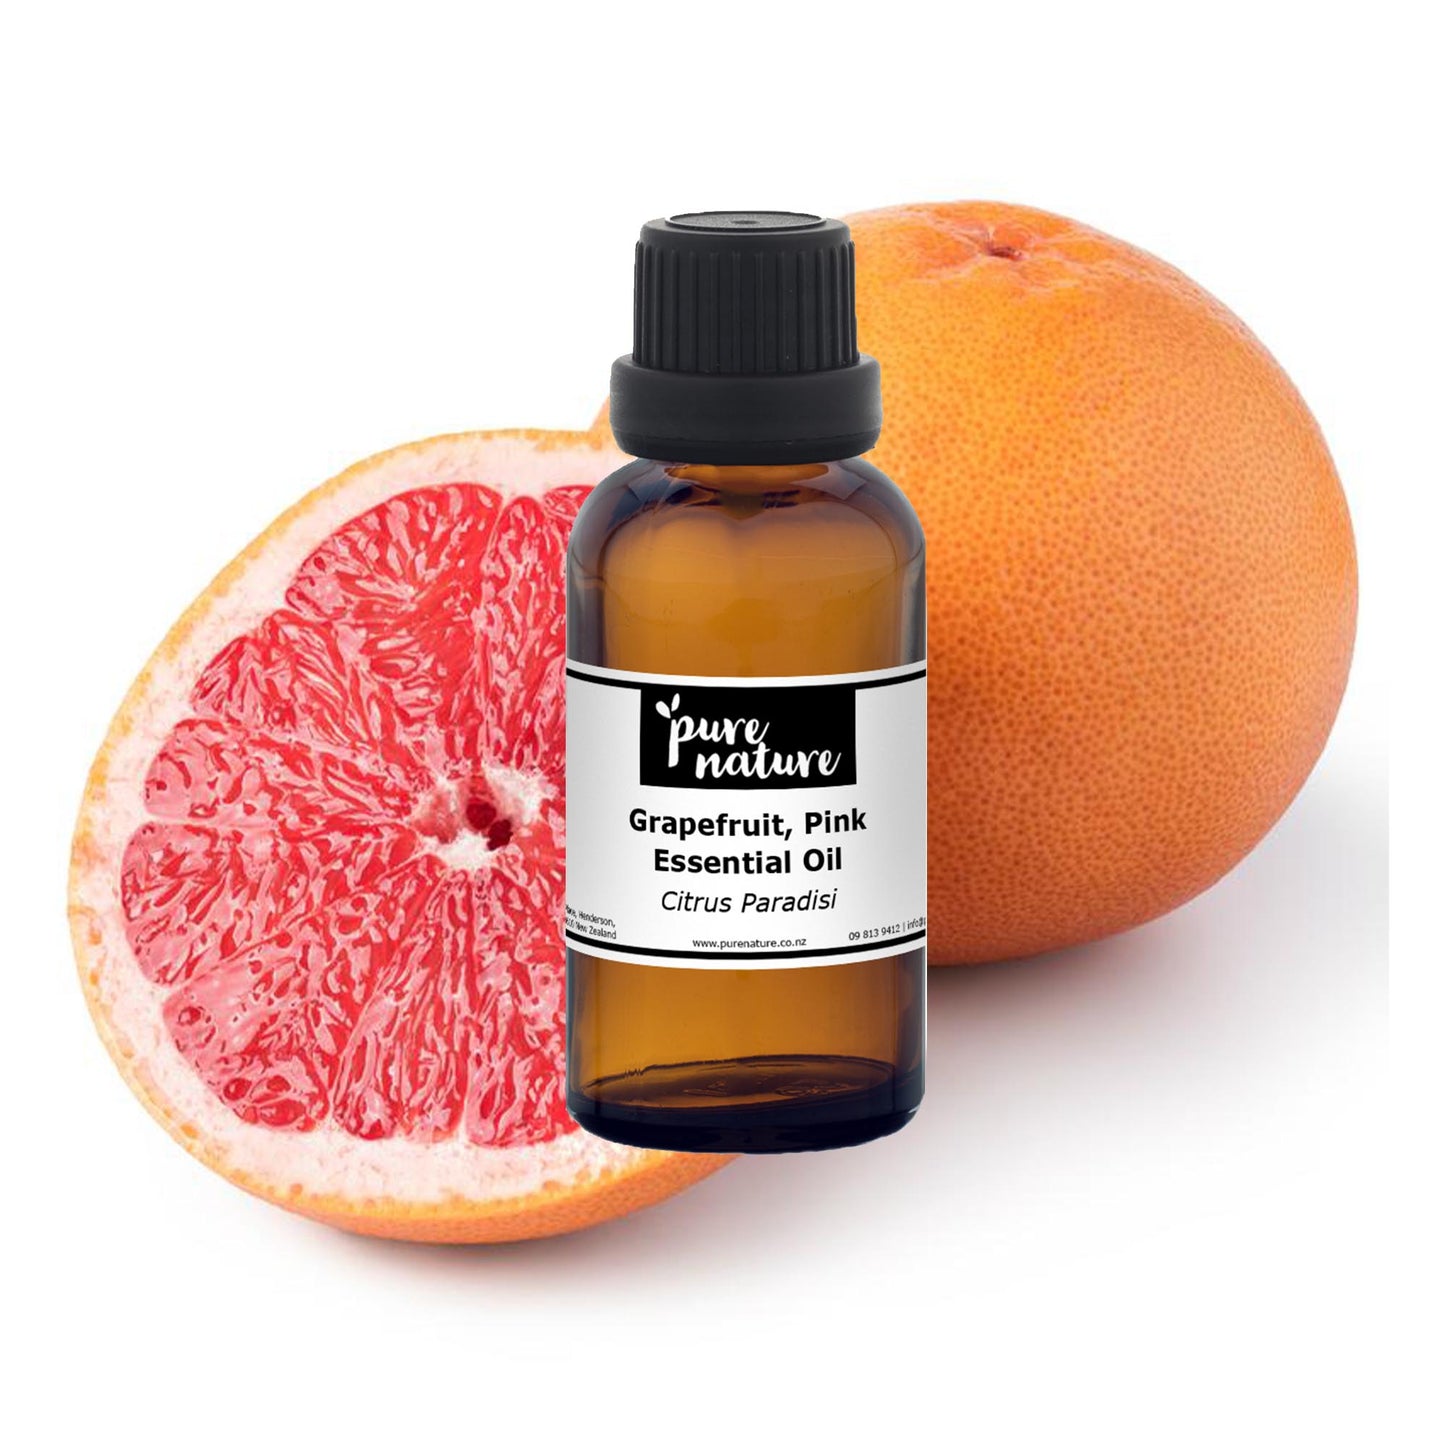 Grapefruit, Pink Essential Oil